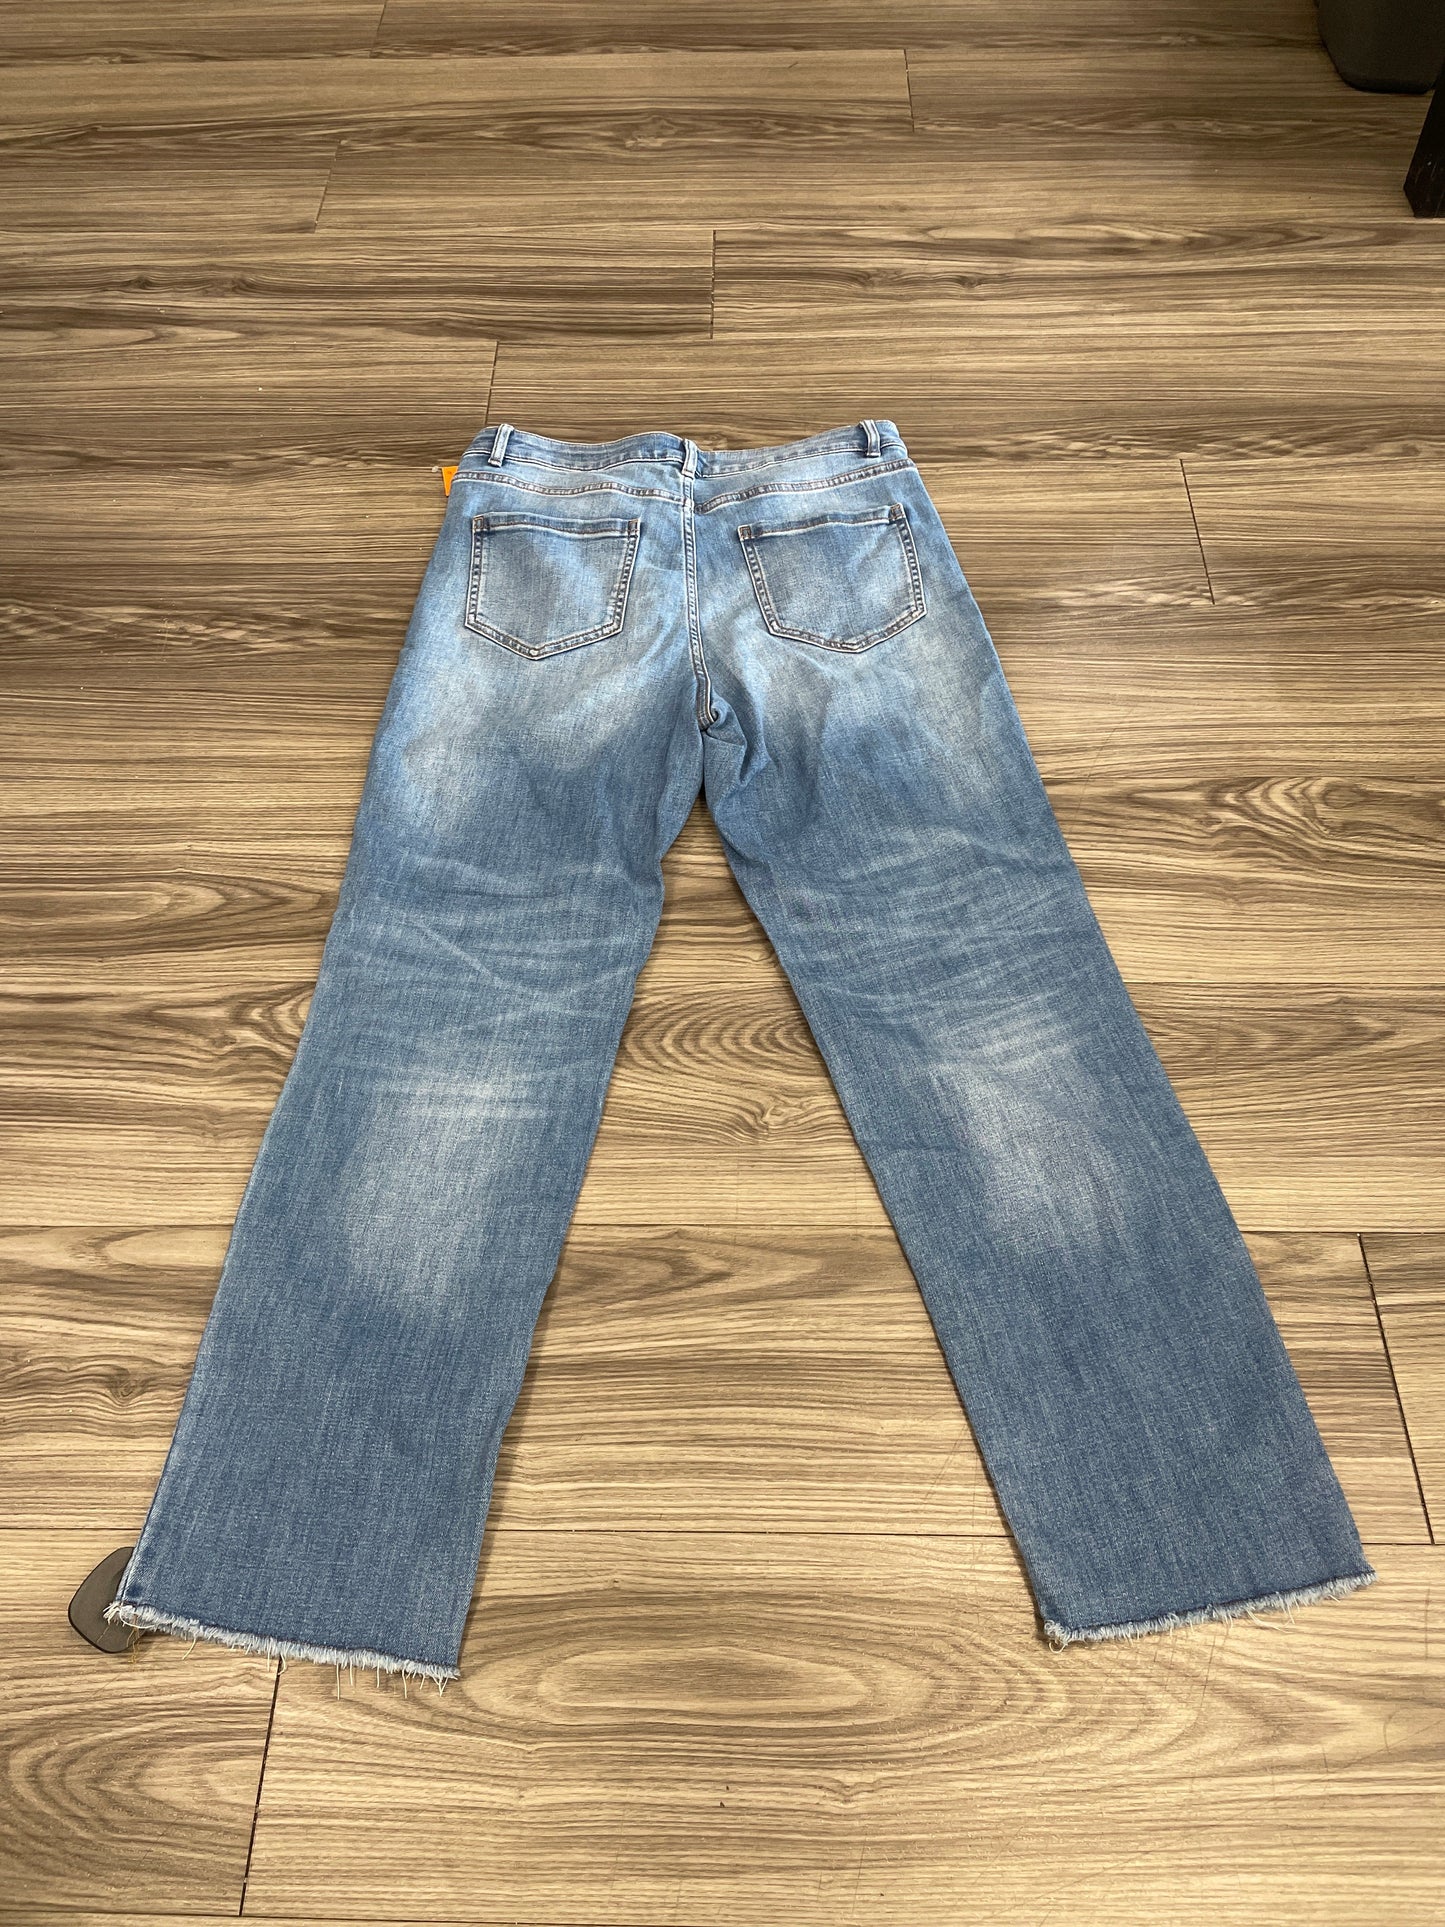 Jeans Straight By J. Jill  Size: 8tall